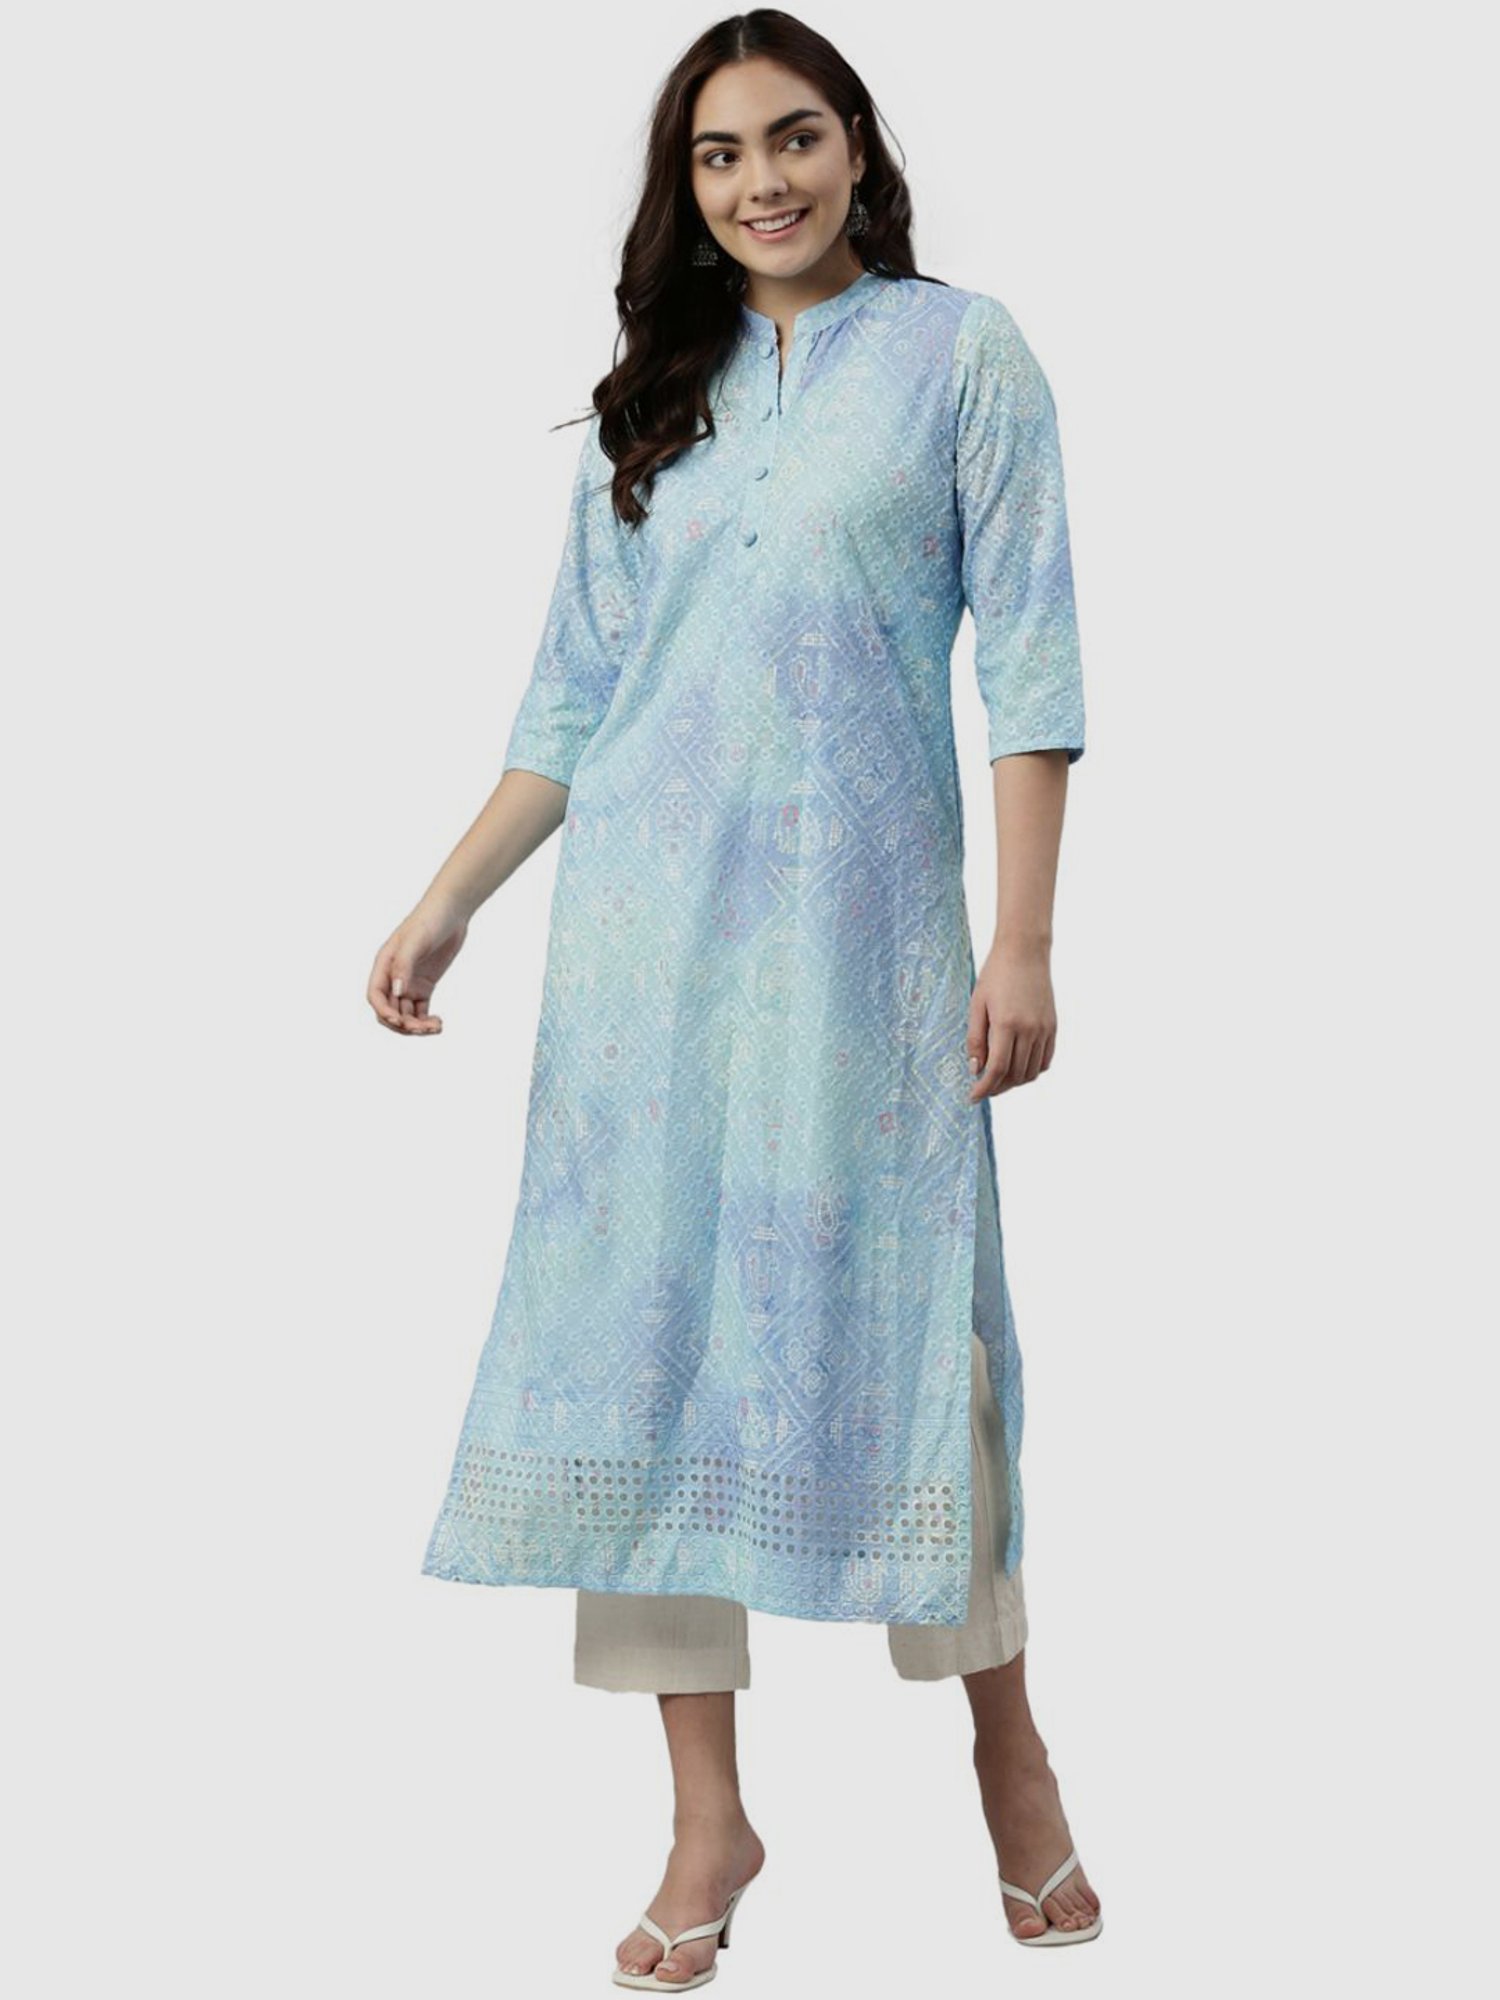 New Embroidered Design Heavy Rayon Fabric Party Wear Long Kurti | Cotton  kurti designs, Kurti designs, Designer kurti patterns